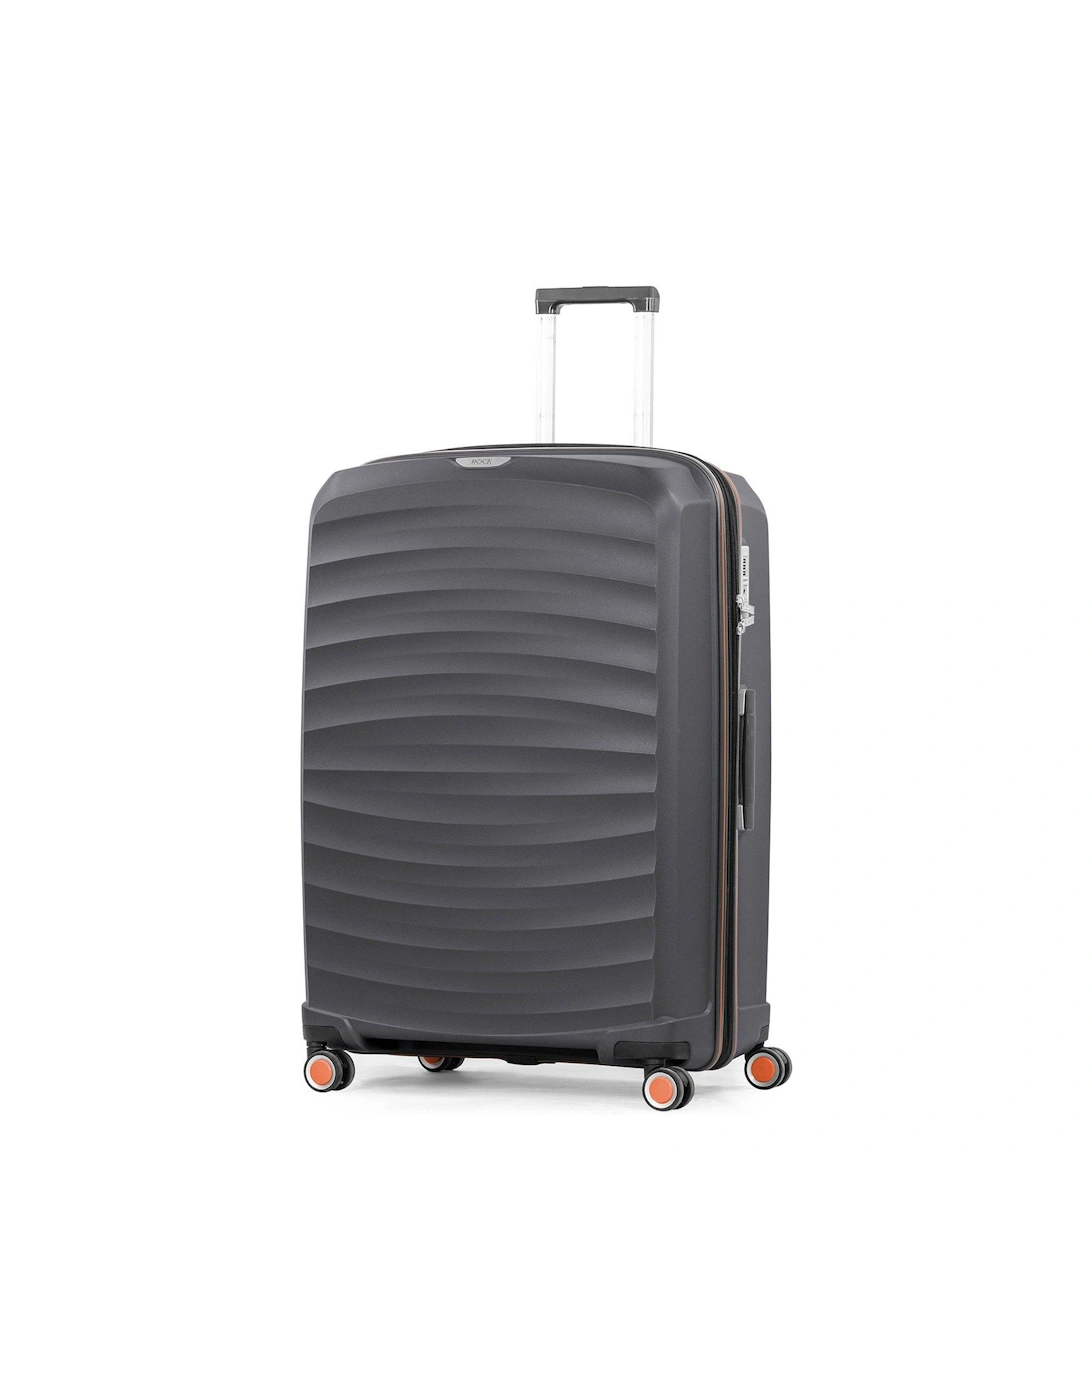 Sunwave Large 8-Wheel Suitcase - Charcoal, 3 of 2